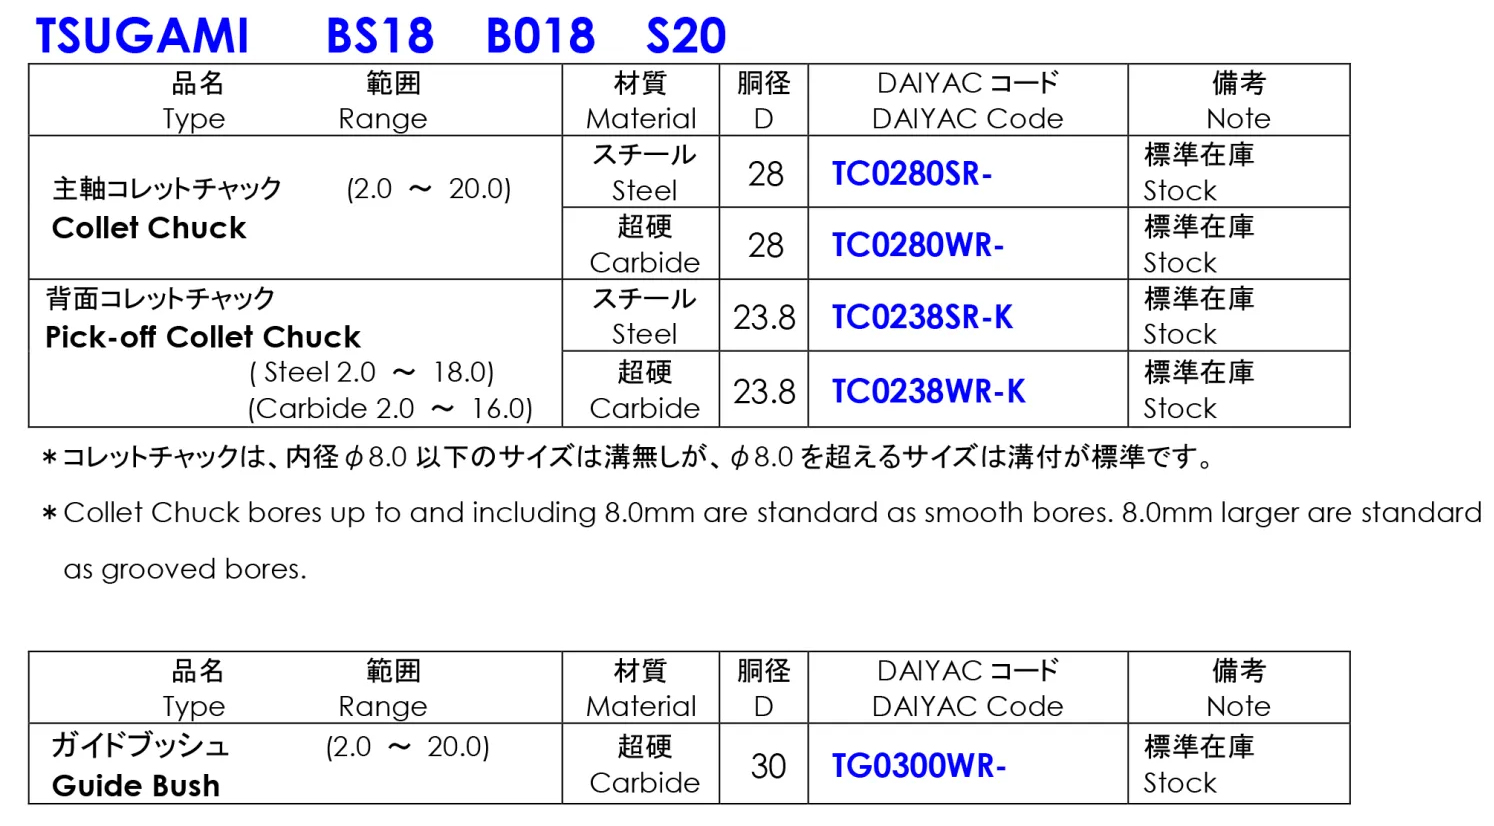 Collet Chuck Daiyac Lắp Máy Tsugami BS18-B018-S20 1